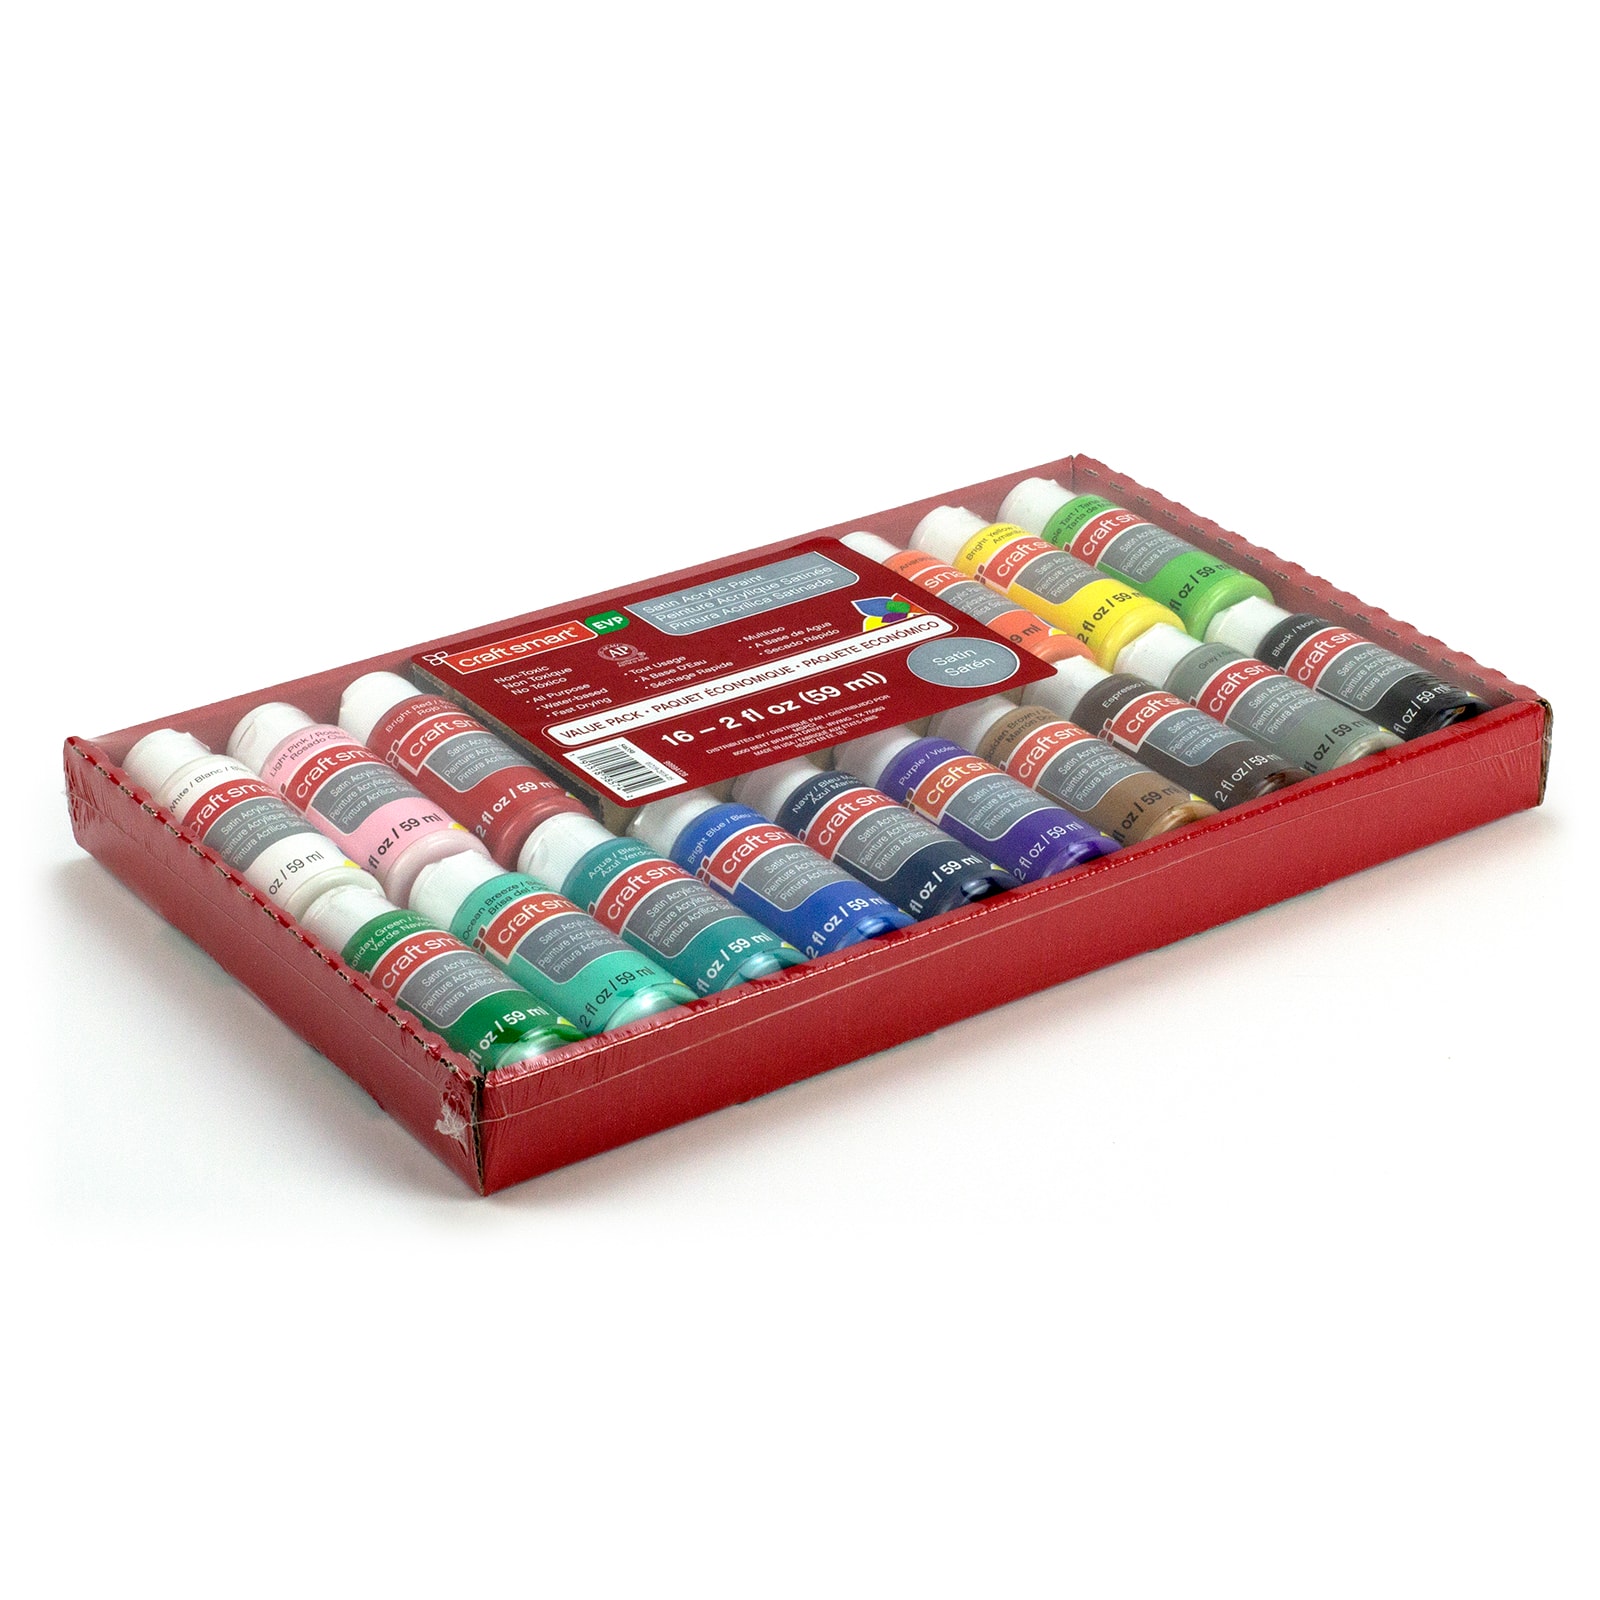 Satin Jewel Tones Acrylic Paint Value Set by Craft Smart®